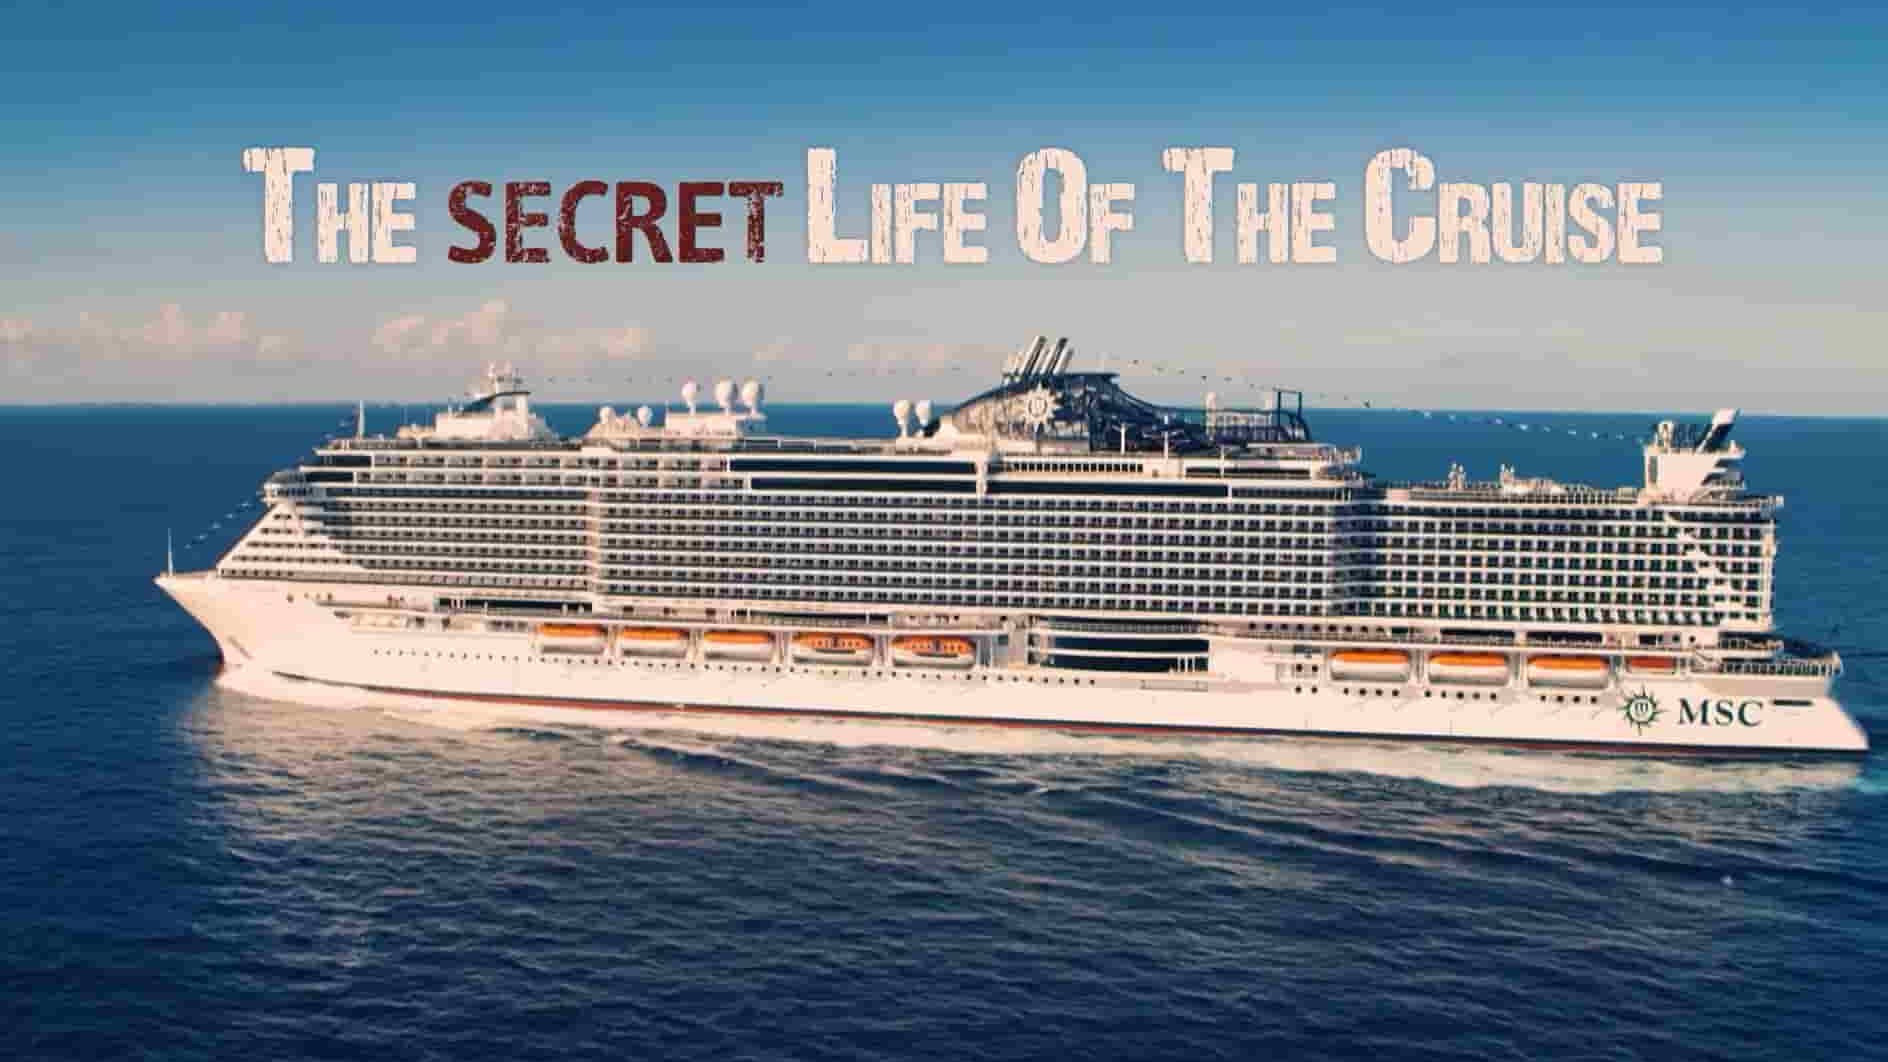 Ch5纪录片《游轮的秘密生活 The Secret Life of the Cruise 2018》全1集 英语中英双字 1080P高清网盘下载